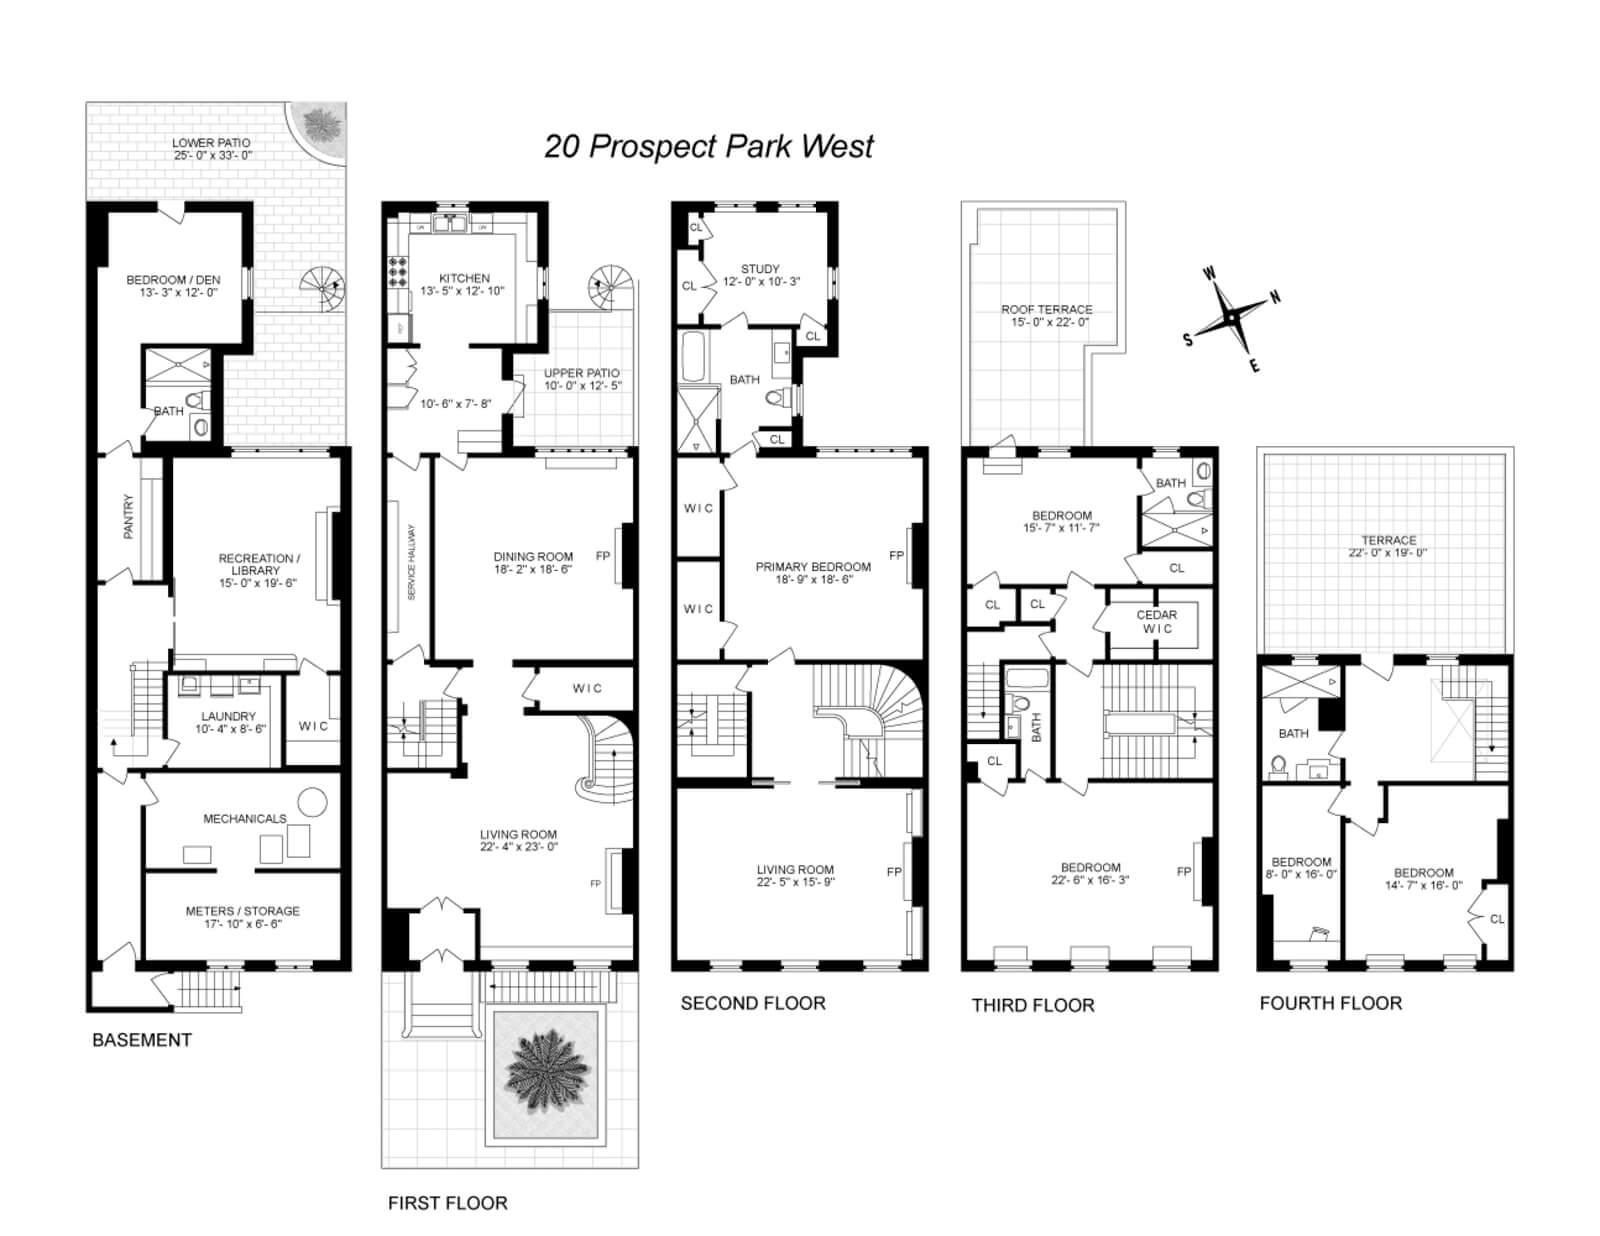 floorplan of 20 prospect park west brooklyn